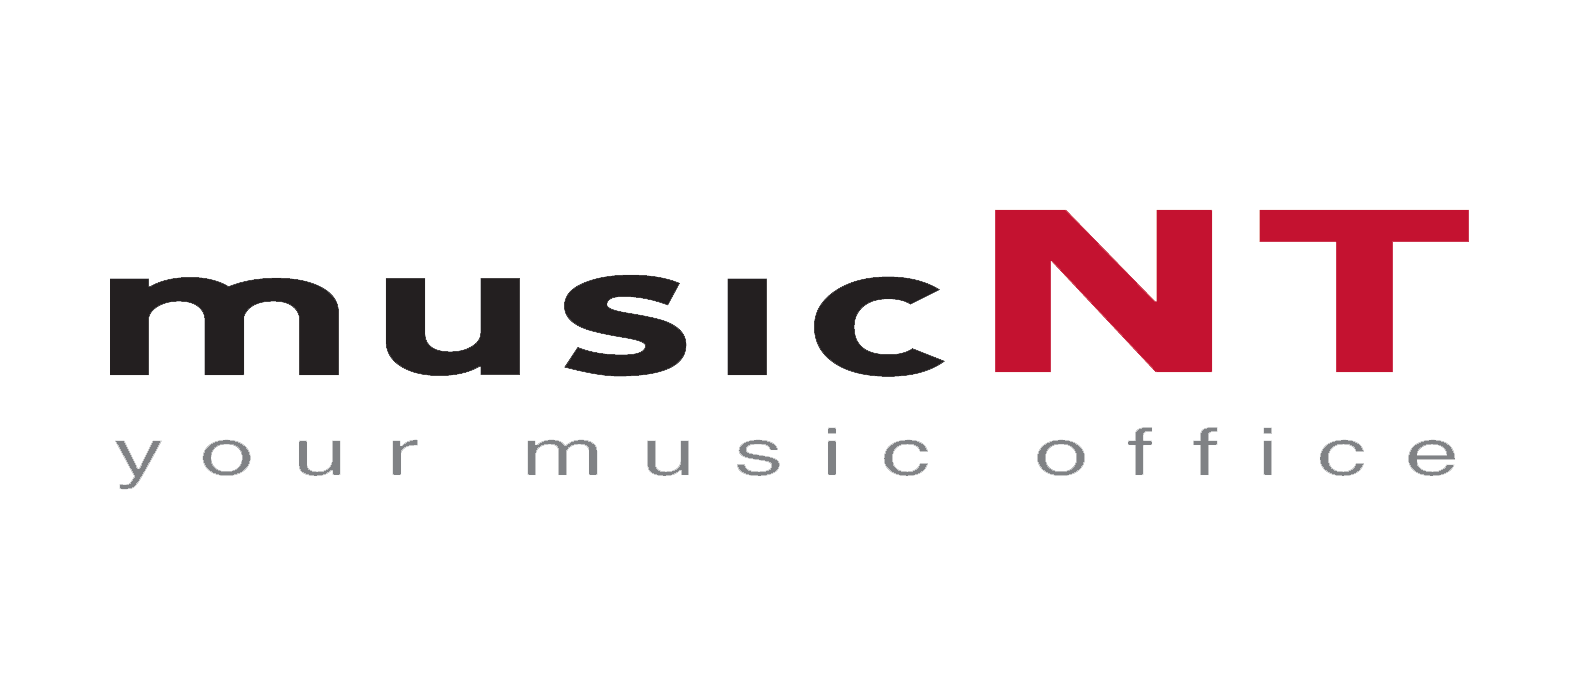 Music NT Logo 2col 2019